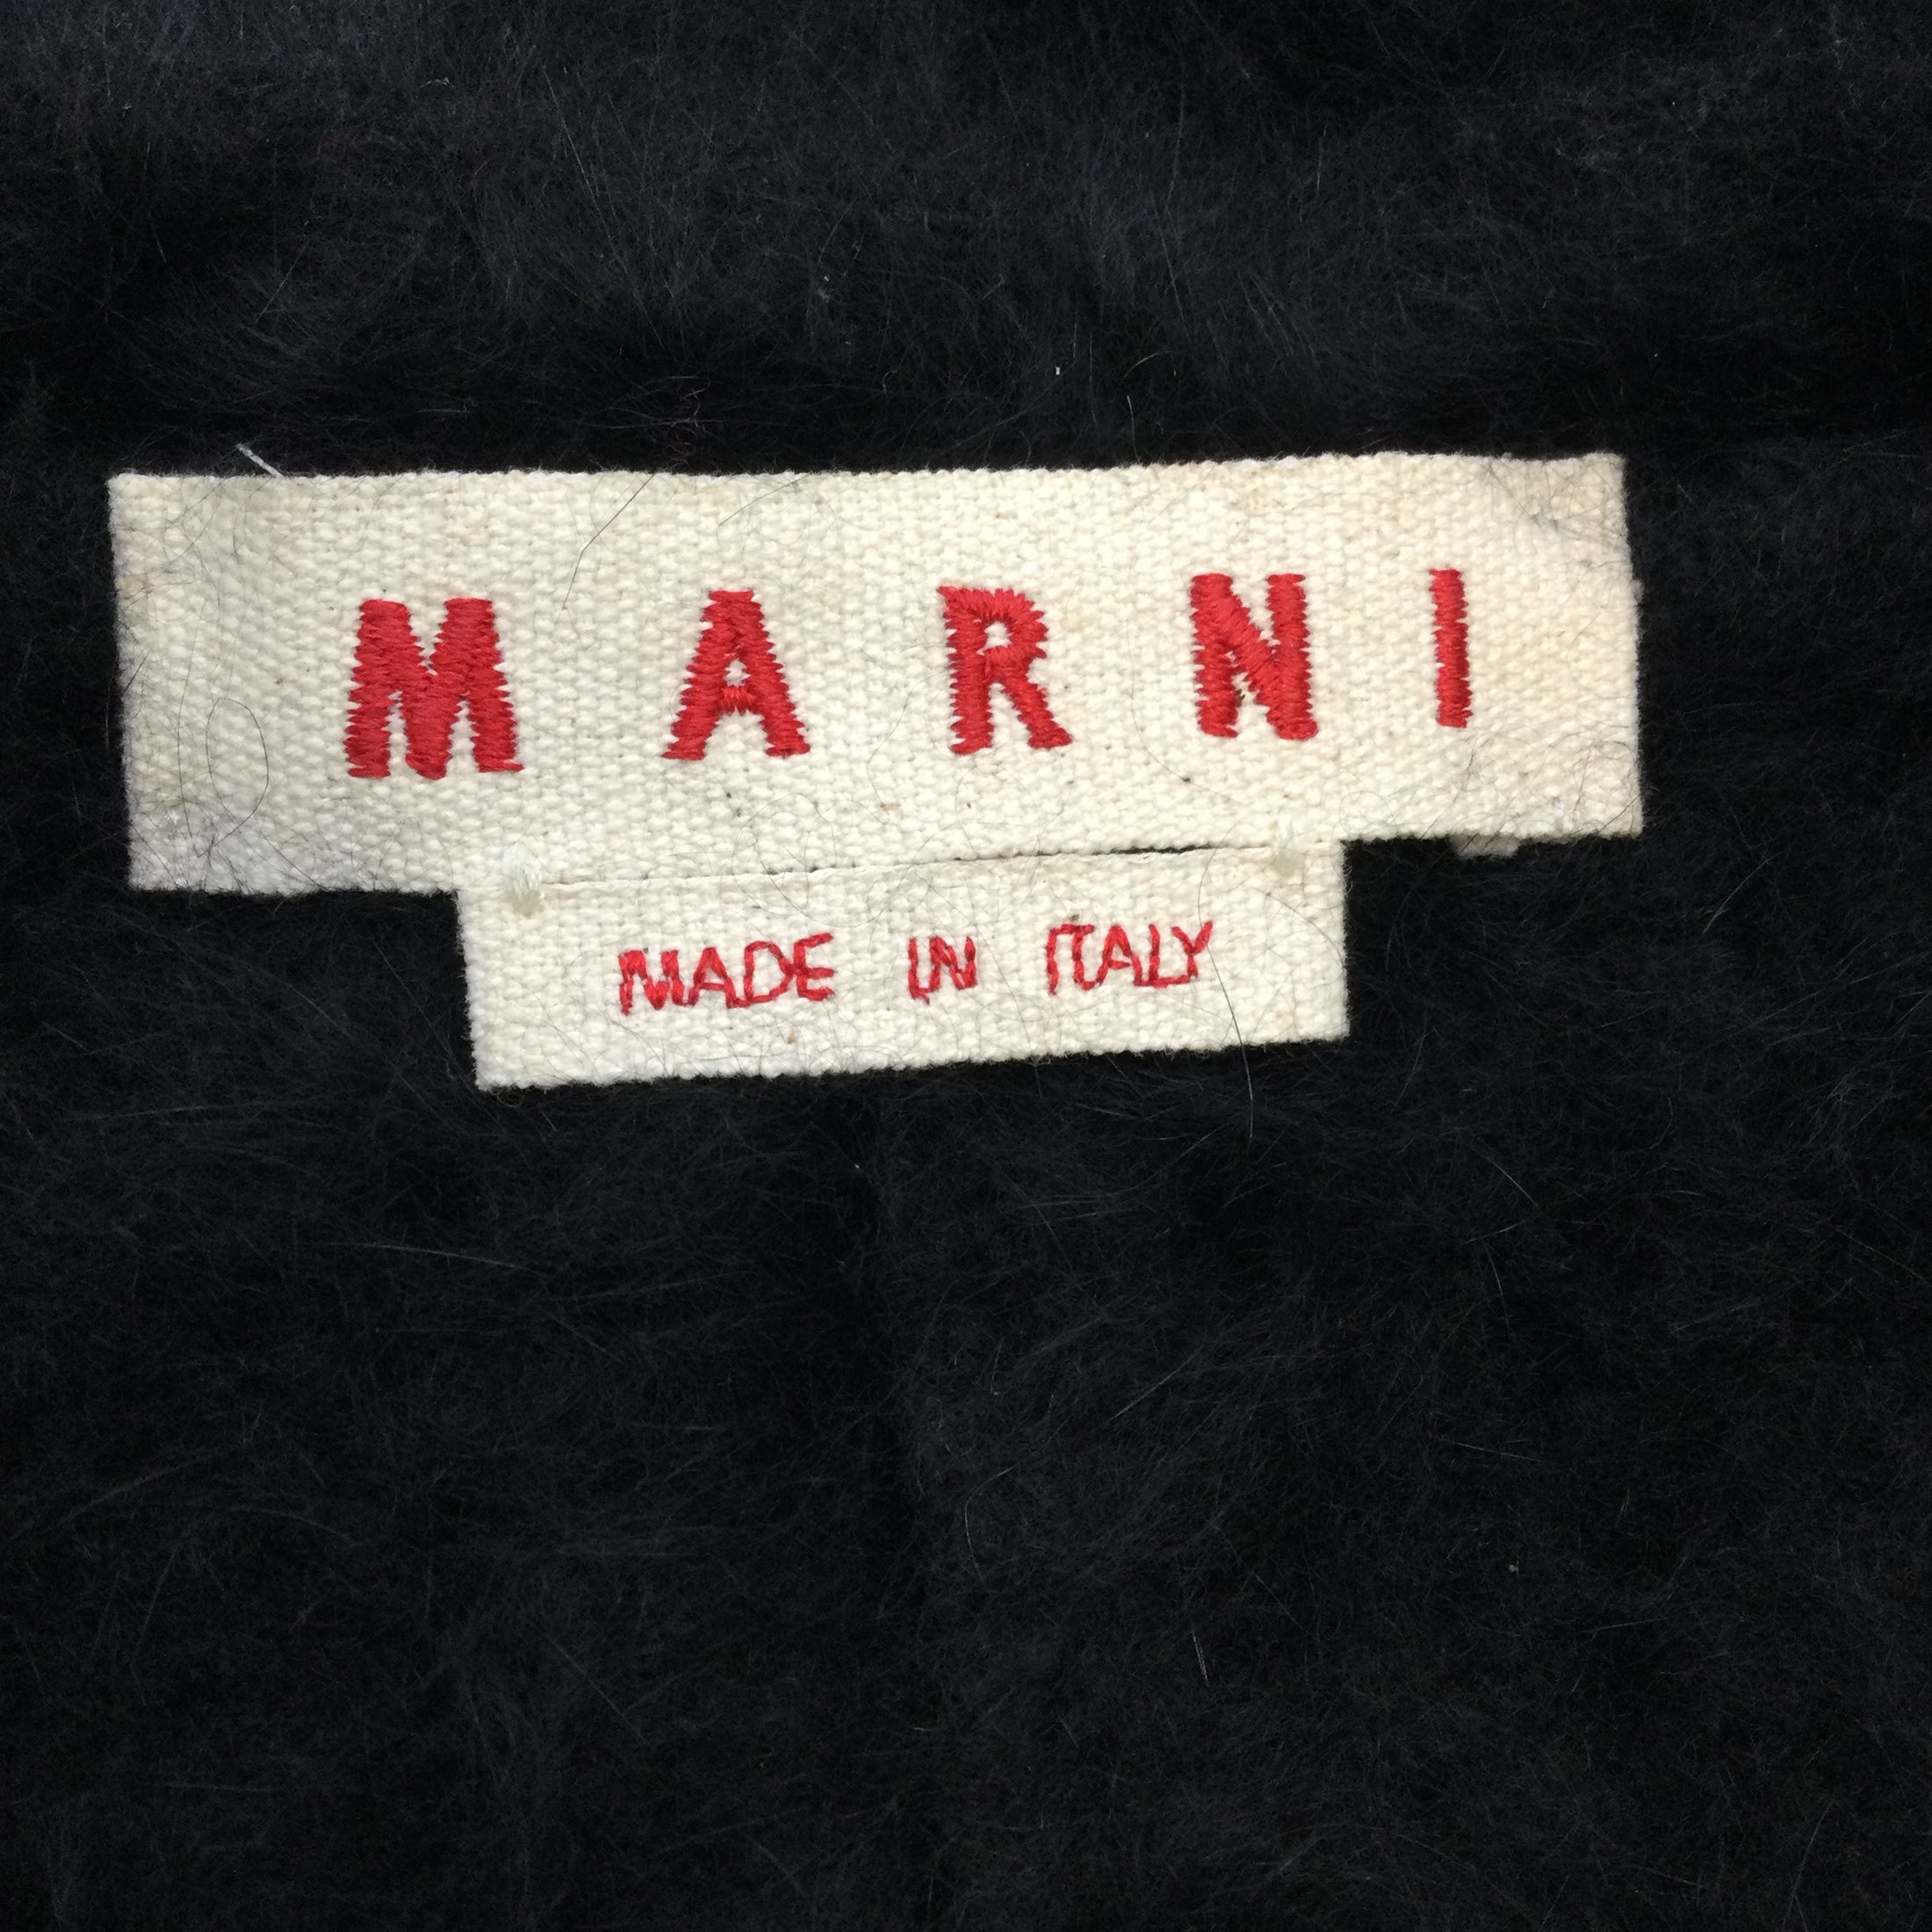 Marni Black Angora Blend Sweater